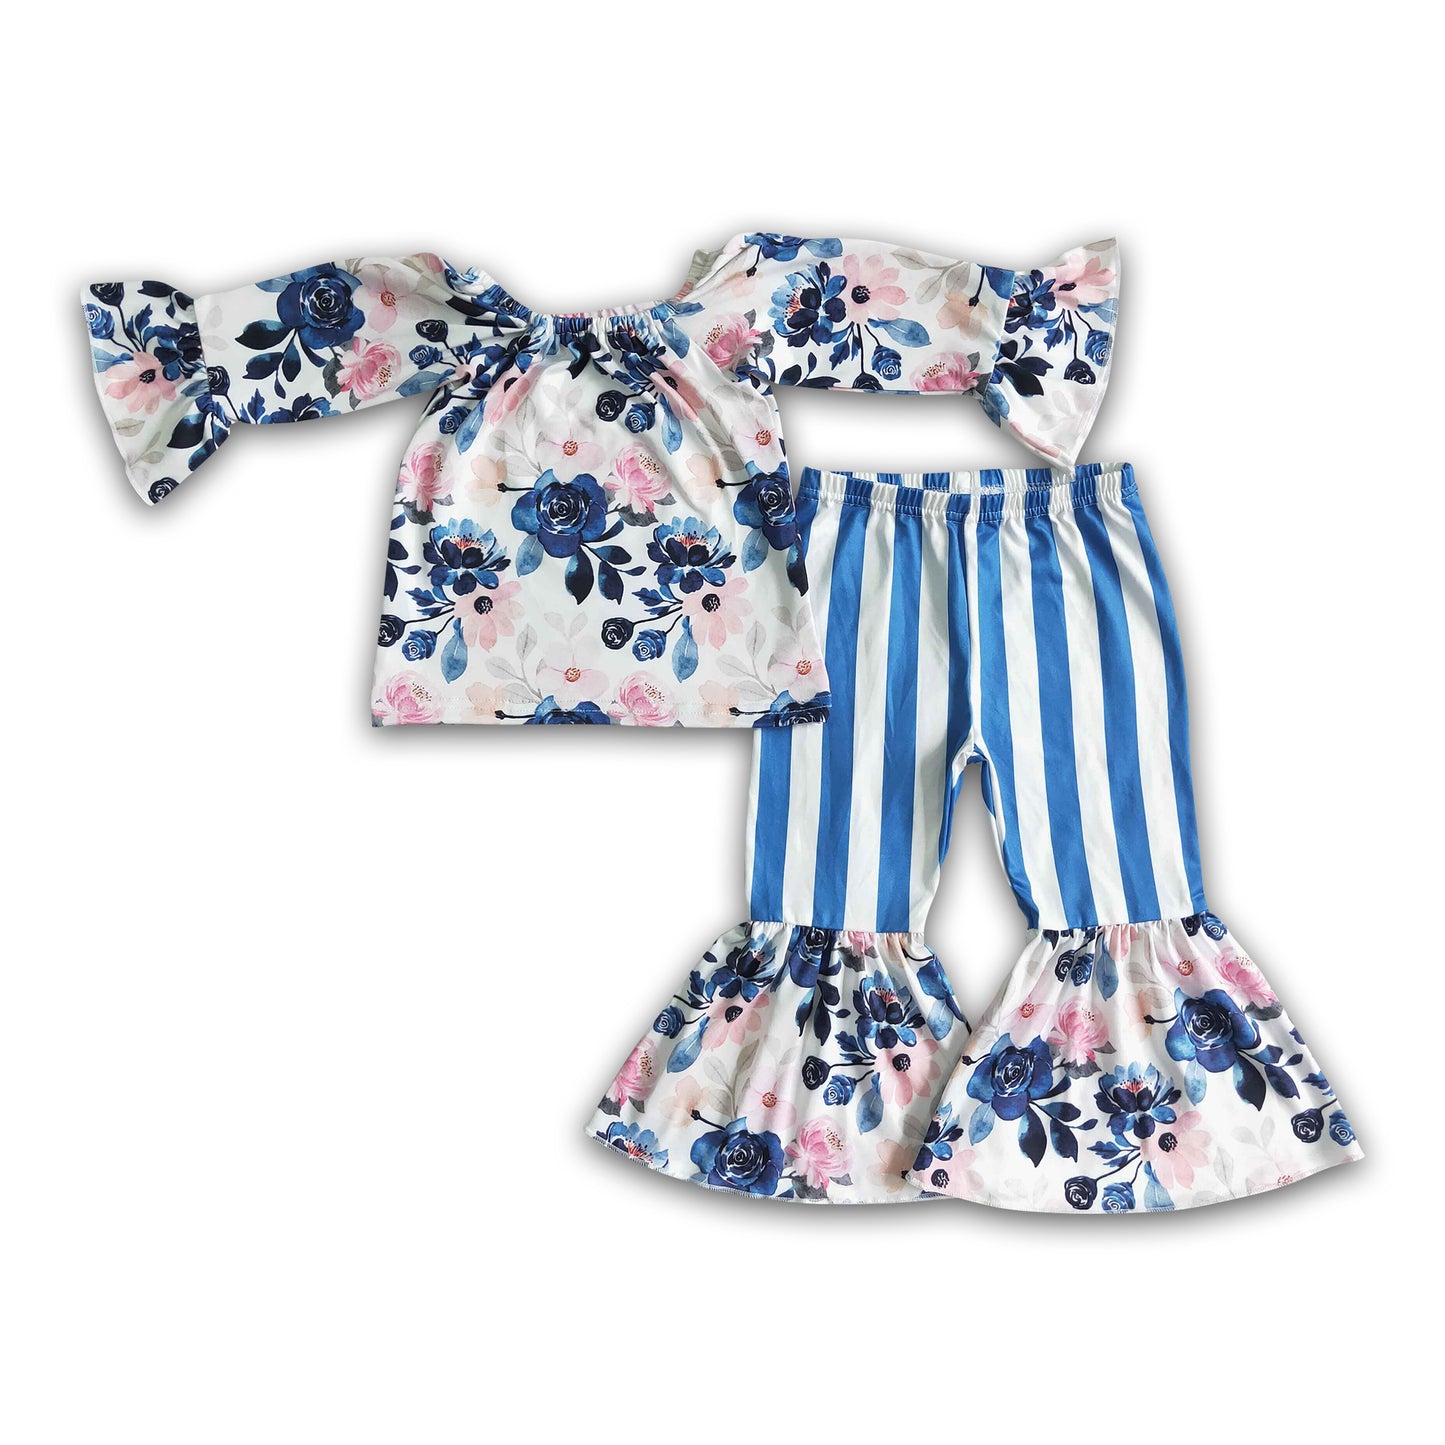 Blue floral top stripe pants girls clothing set